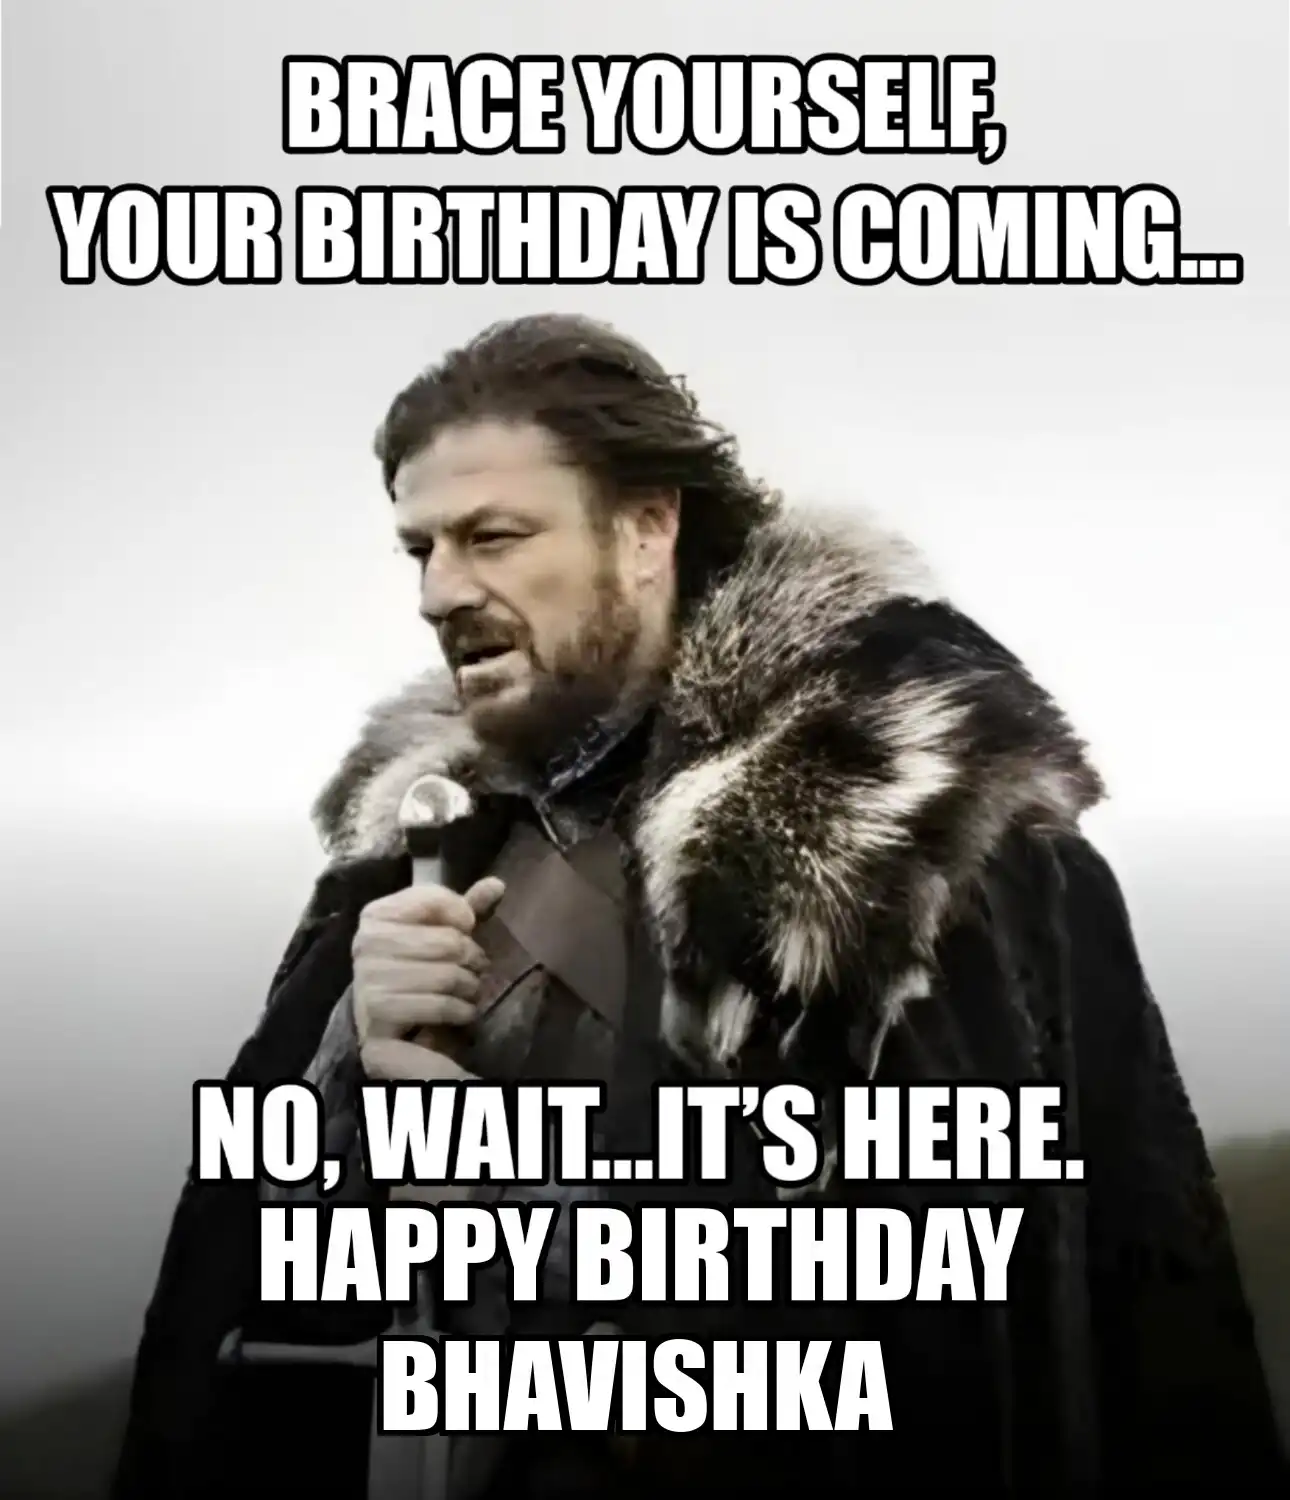 Happy Birthday Bhavishka Brace Yourself Your Birthday Is Coming Meme